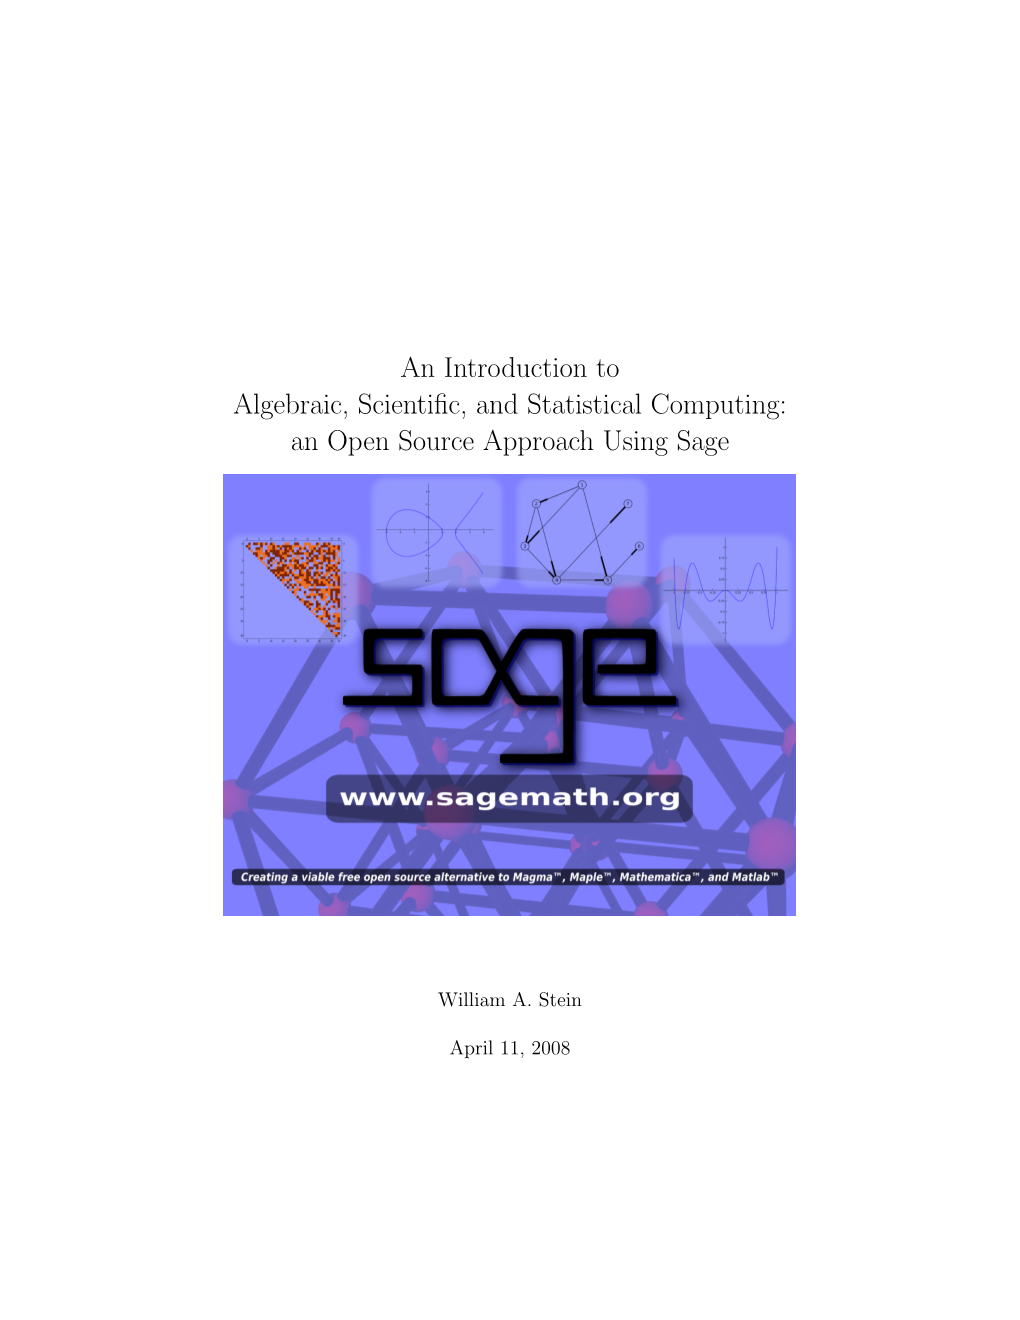 An Open Source Approach Using Sage